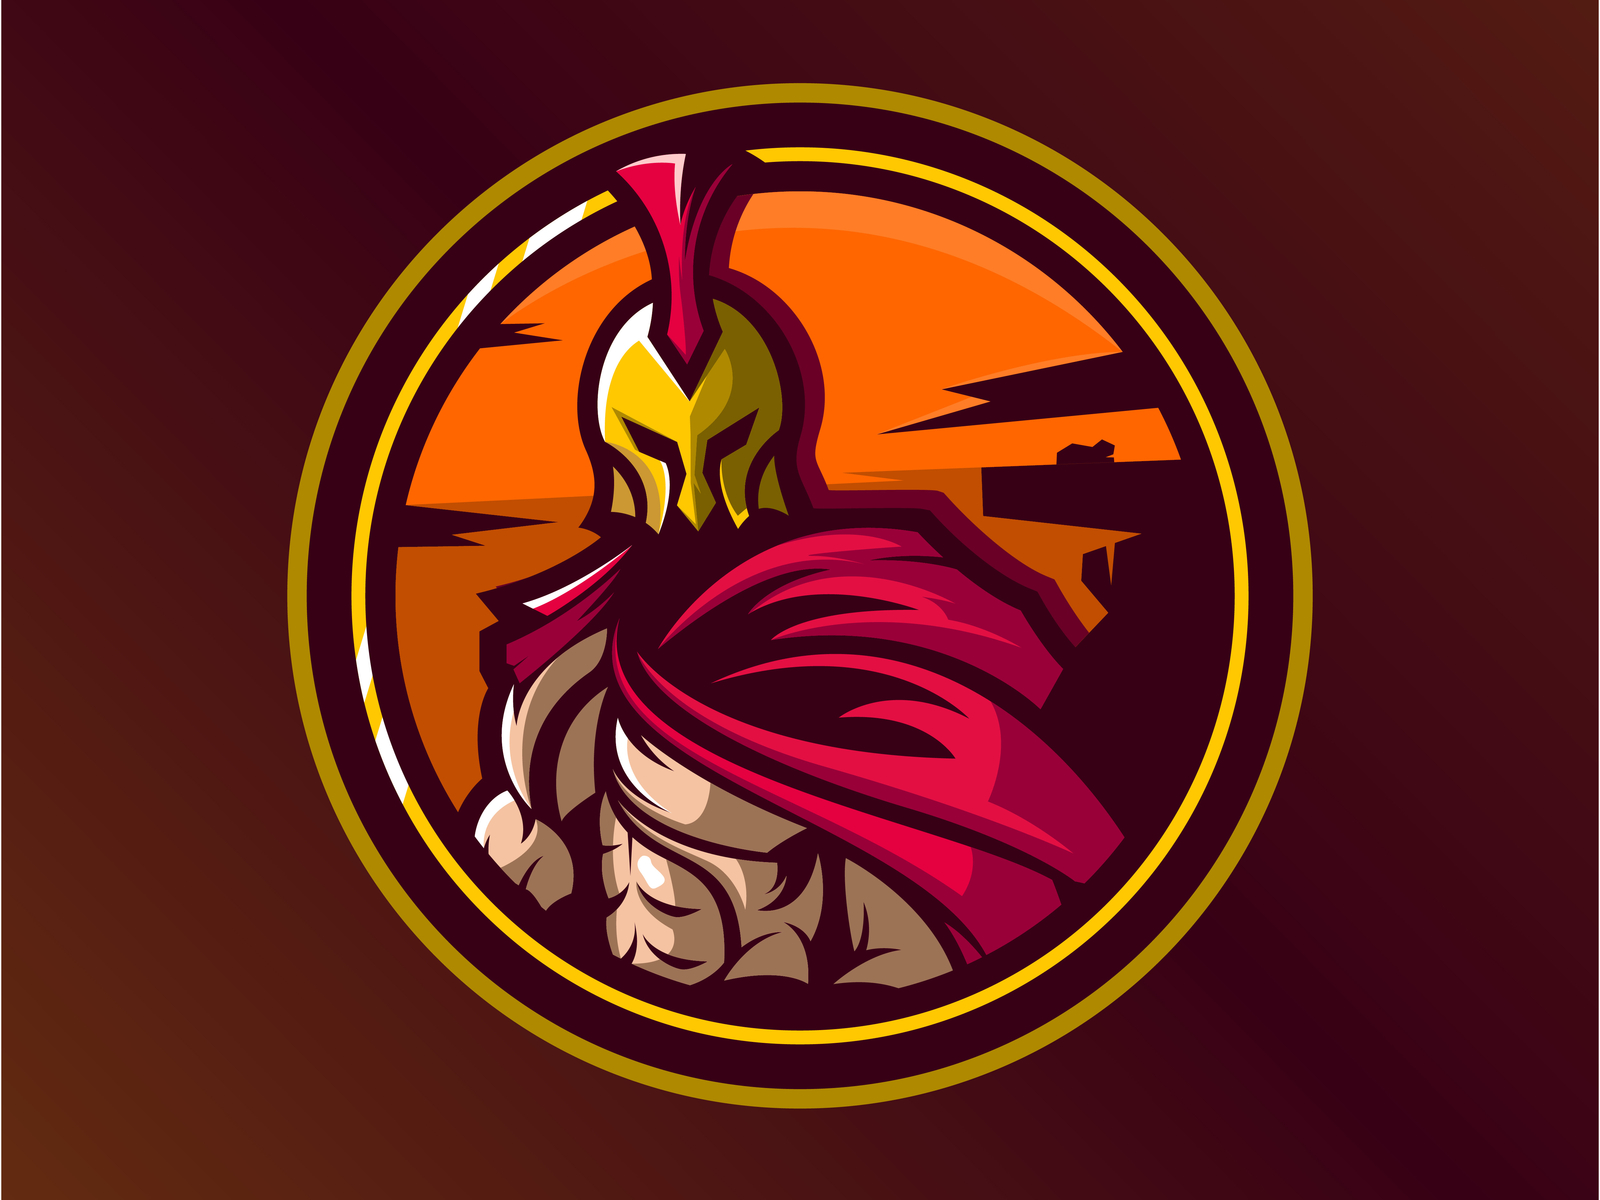 spartans logo red